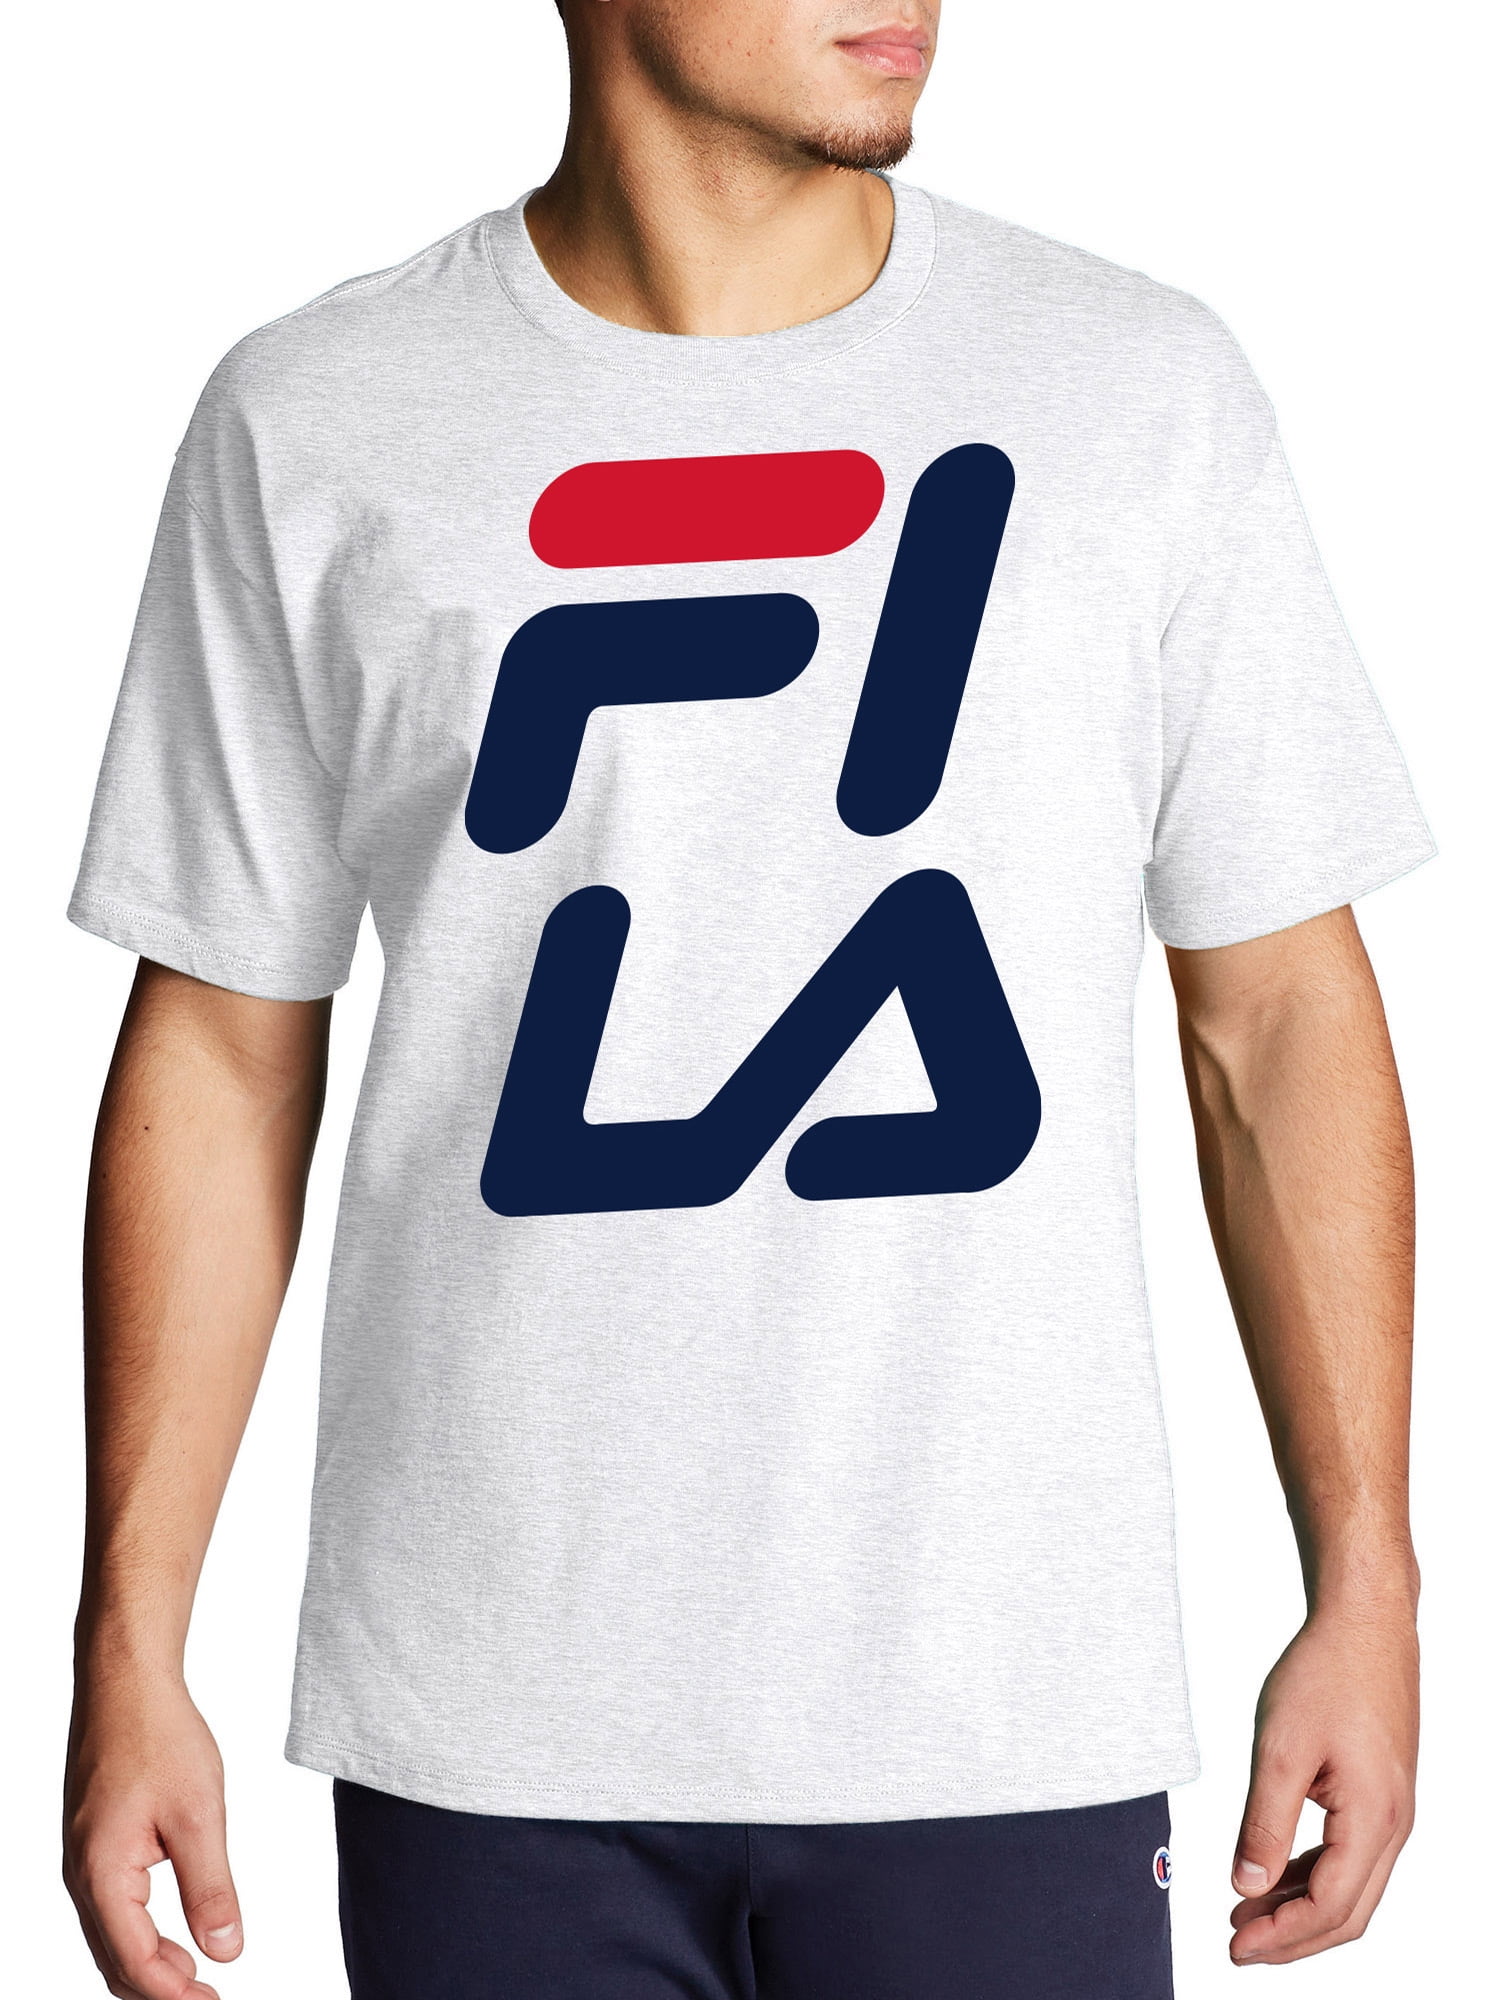 Problem skade krak Fila Men's Big & Tall Big Logo Short Sleeve T-Shirt, Sizes XLT-6XL -  Walmart.com